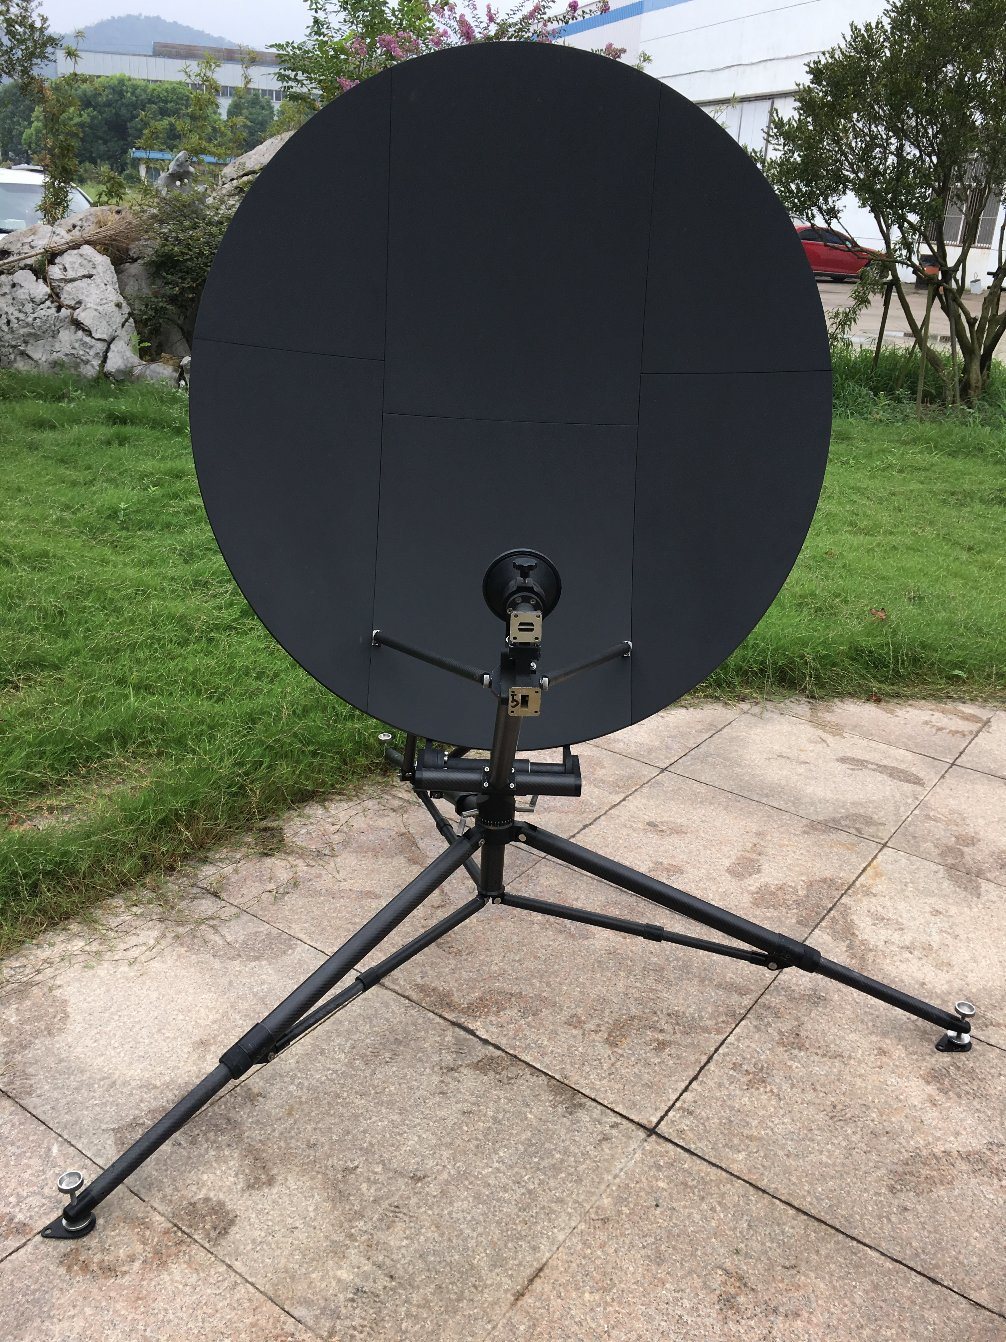 Professional 1.2m Full Carbon Fiber Rxtx Flyaway Satellite Dish Antenna